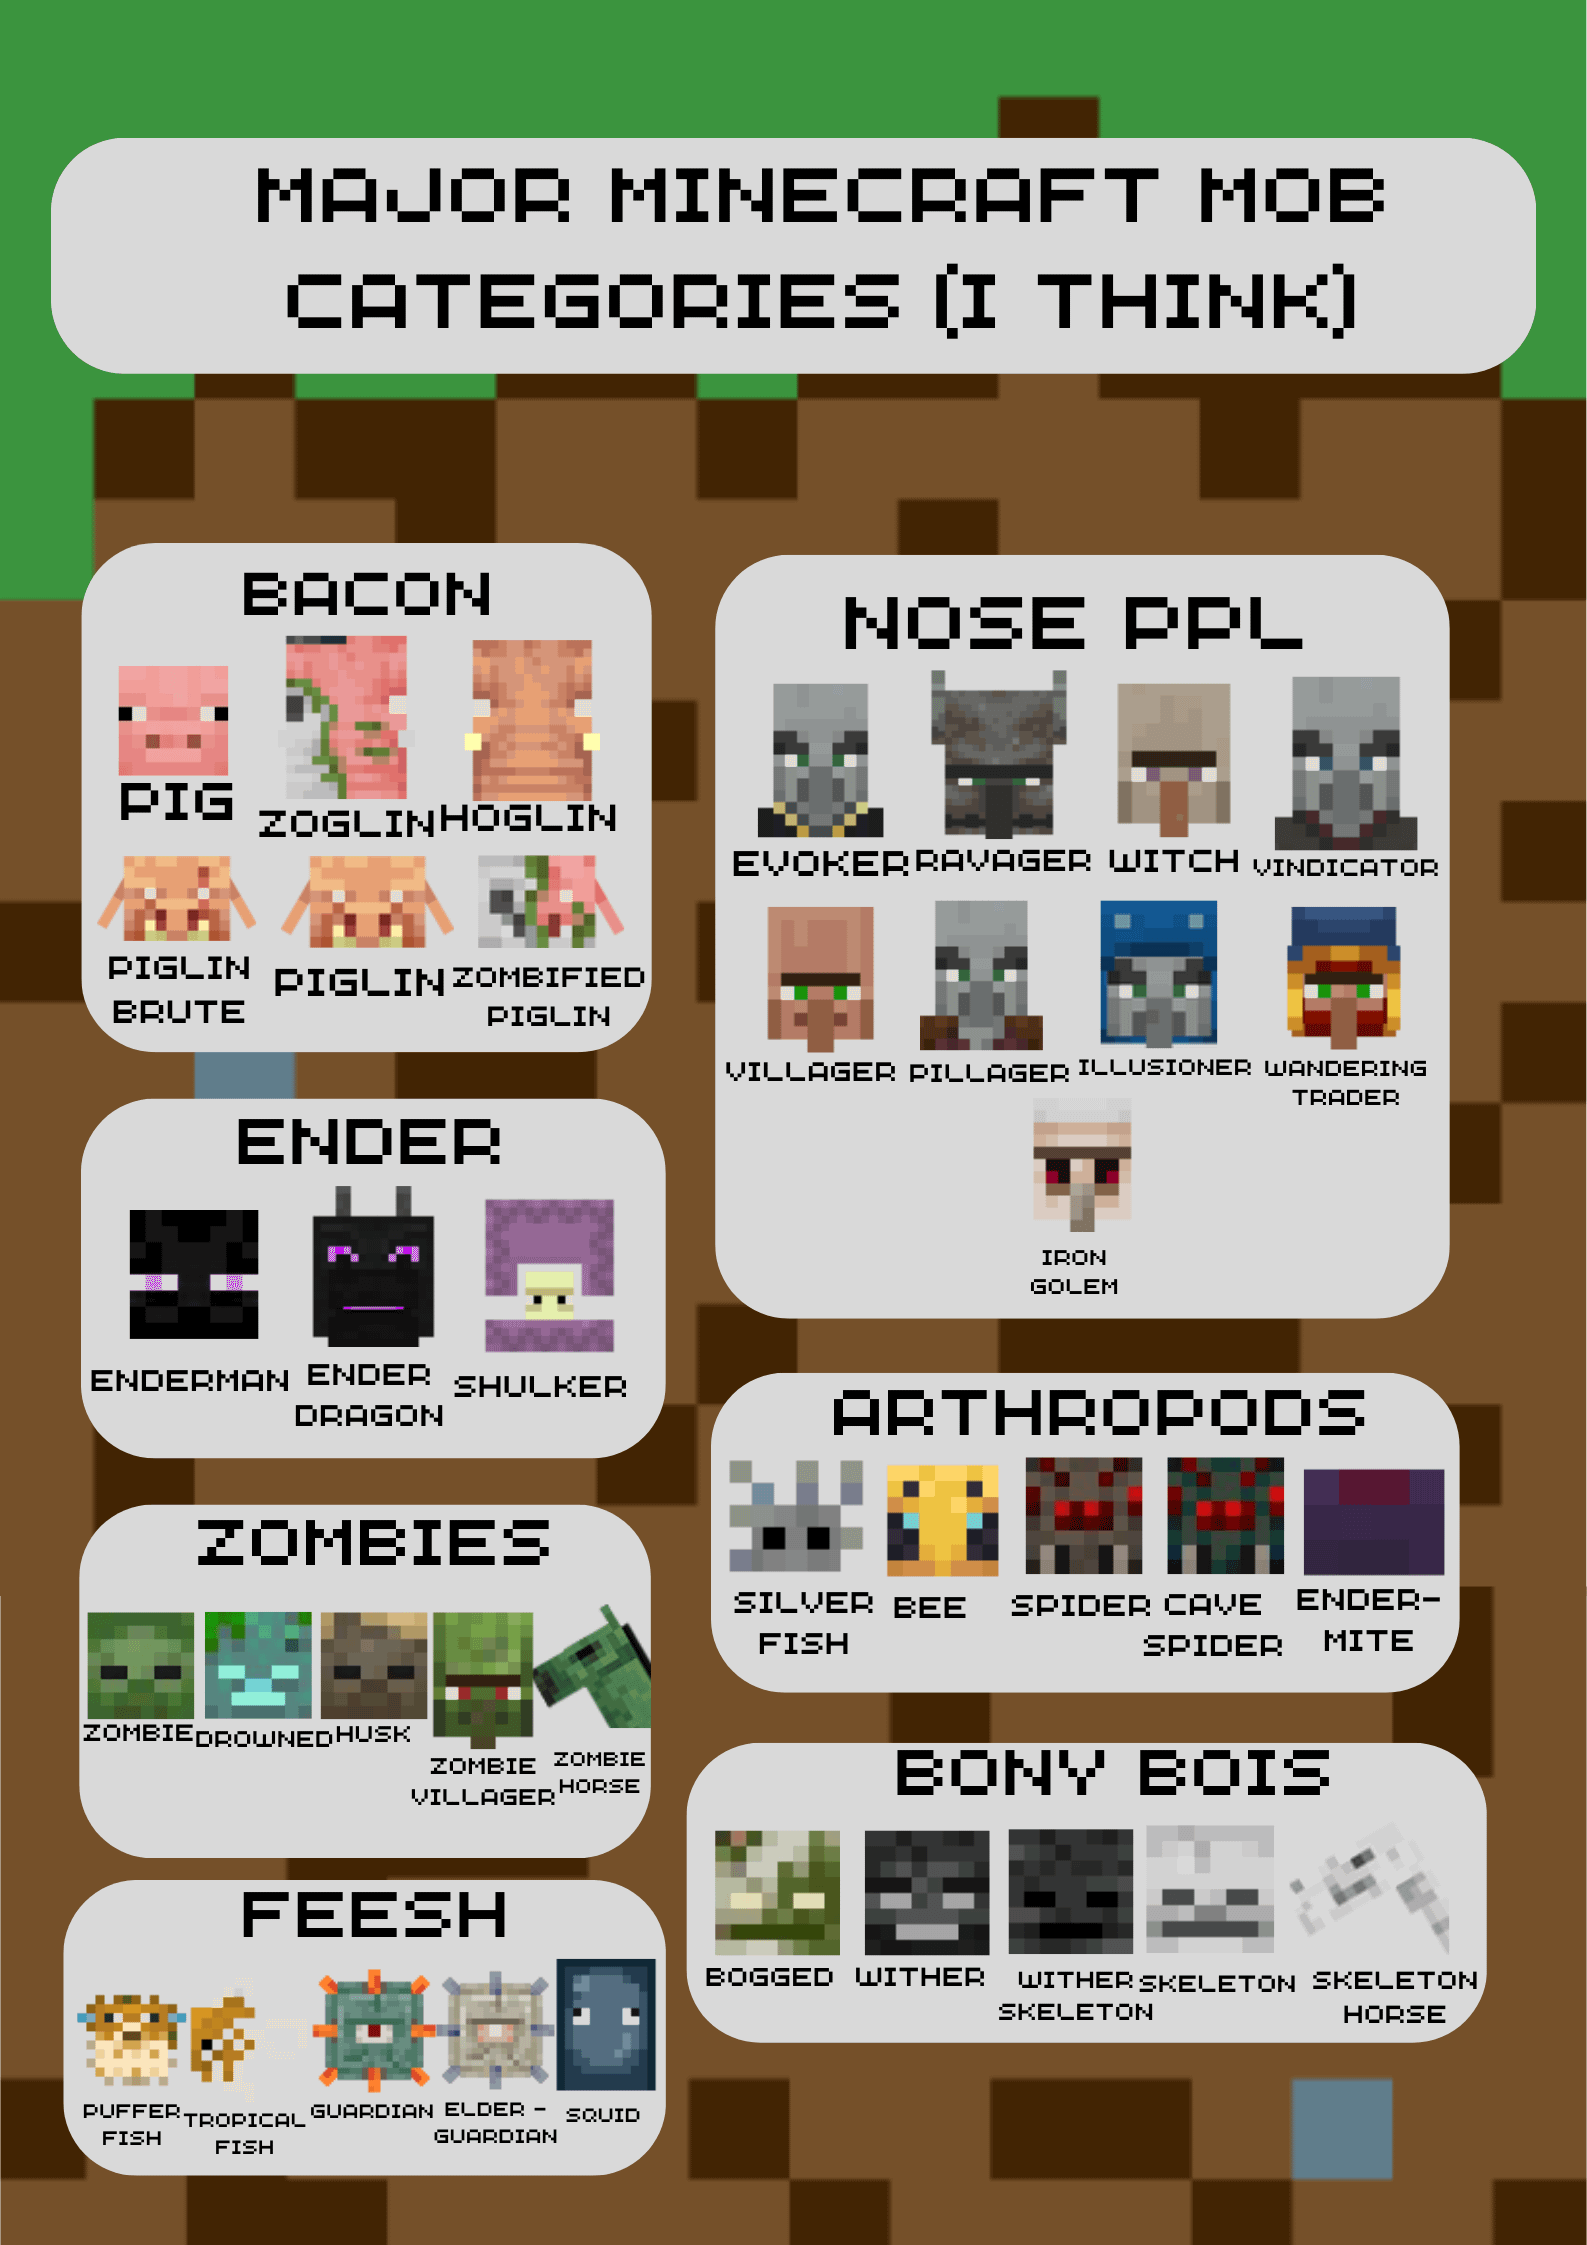 Minecraft Memes - Minecraft Mob Madness: Major Categories!